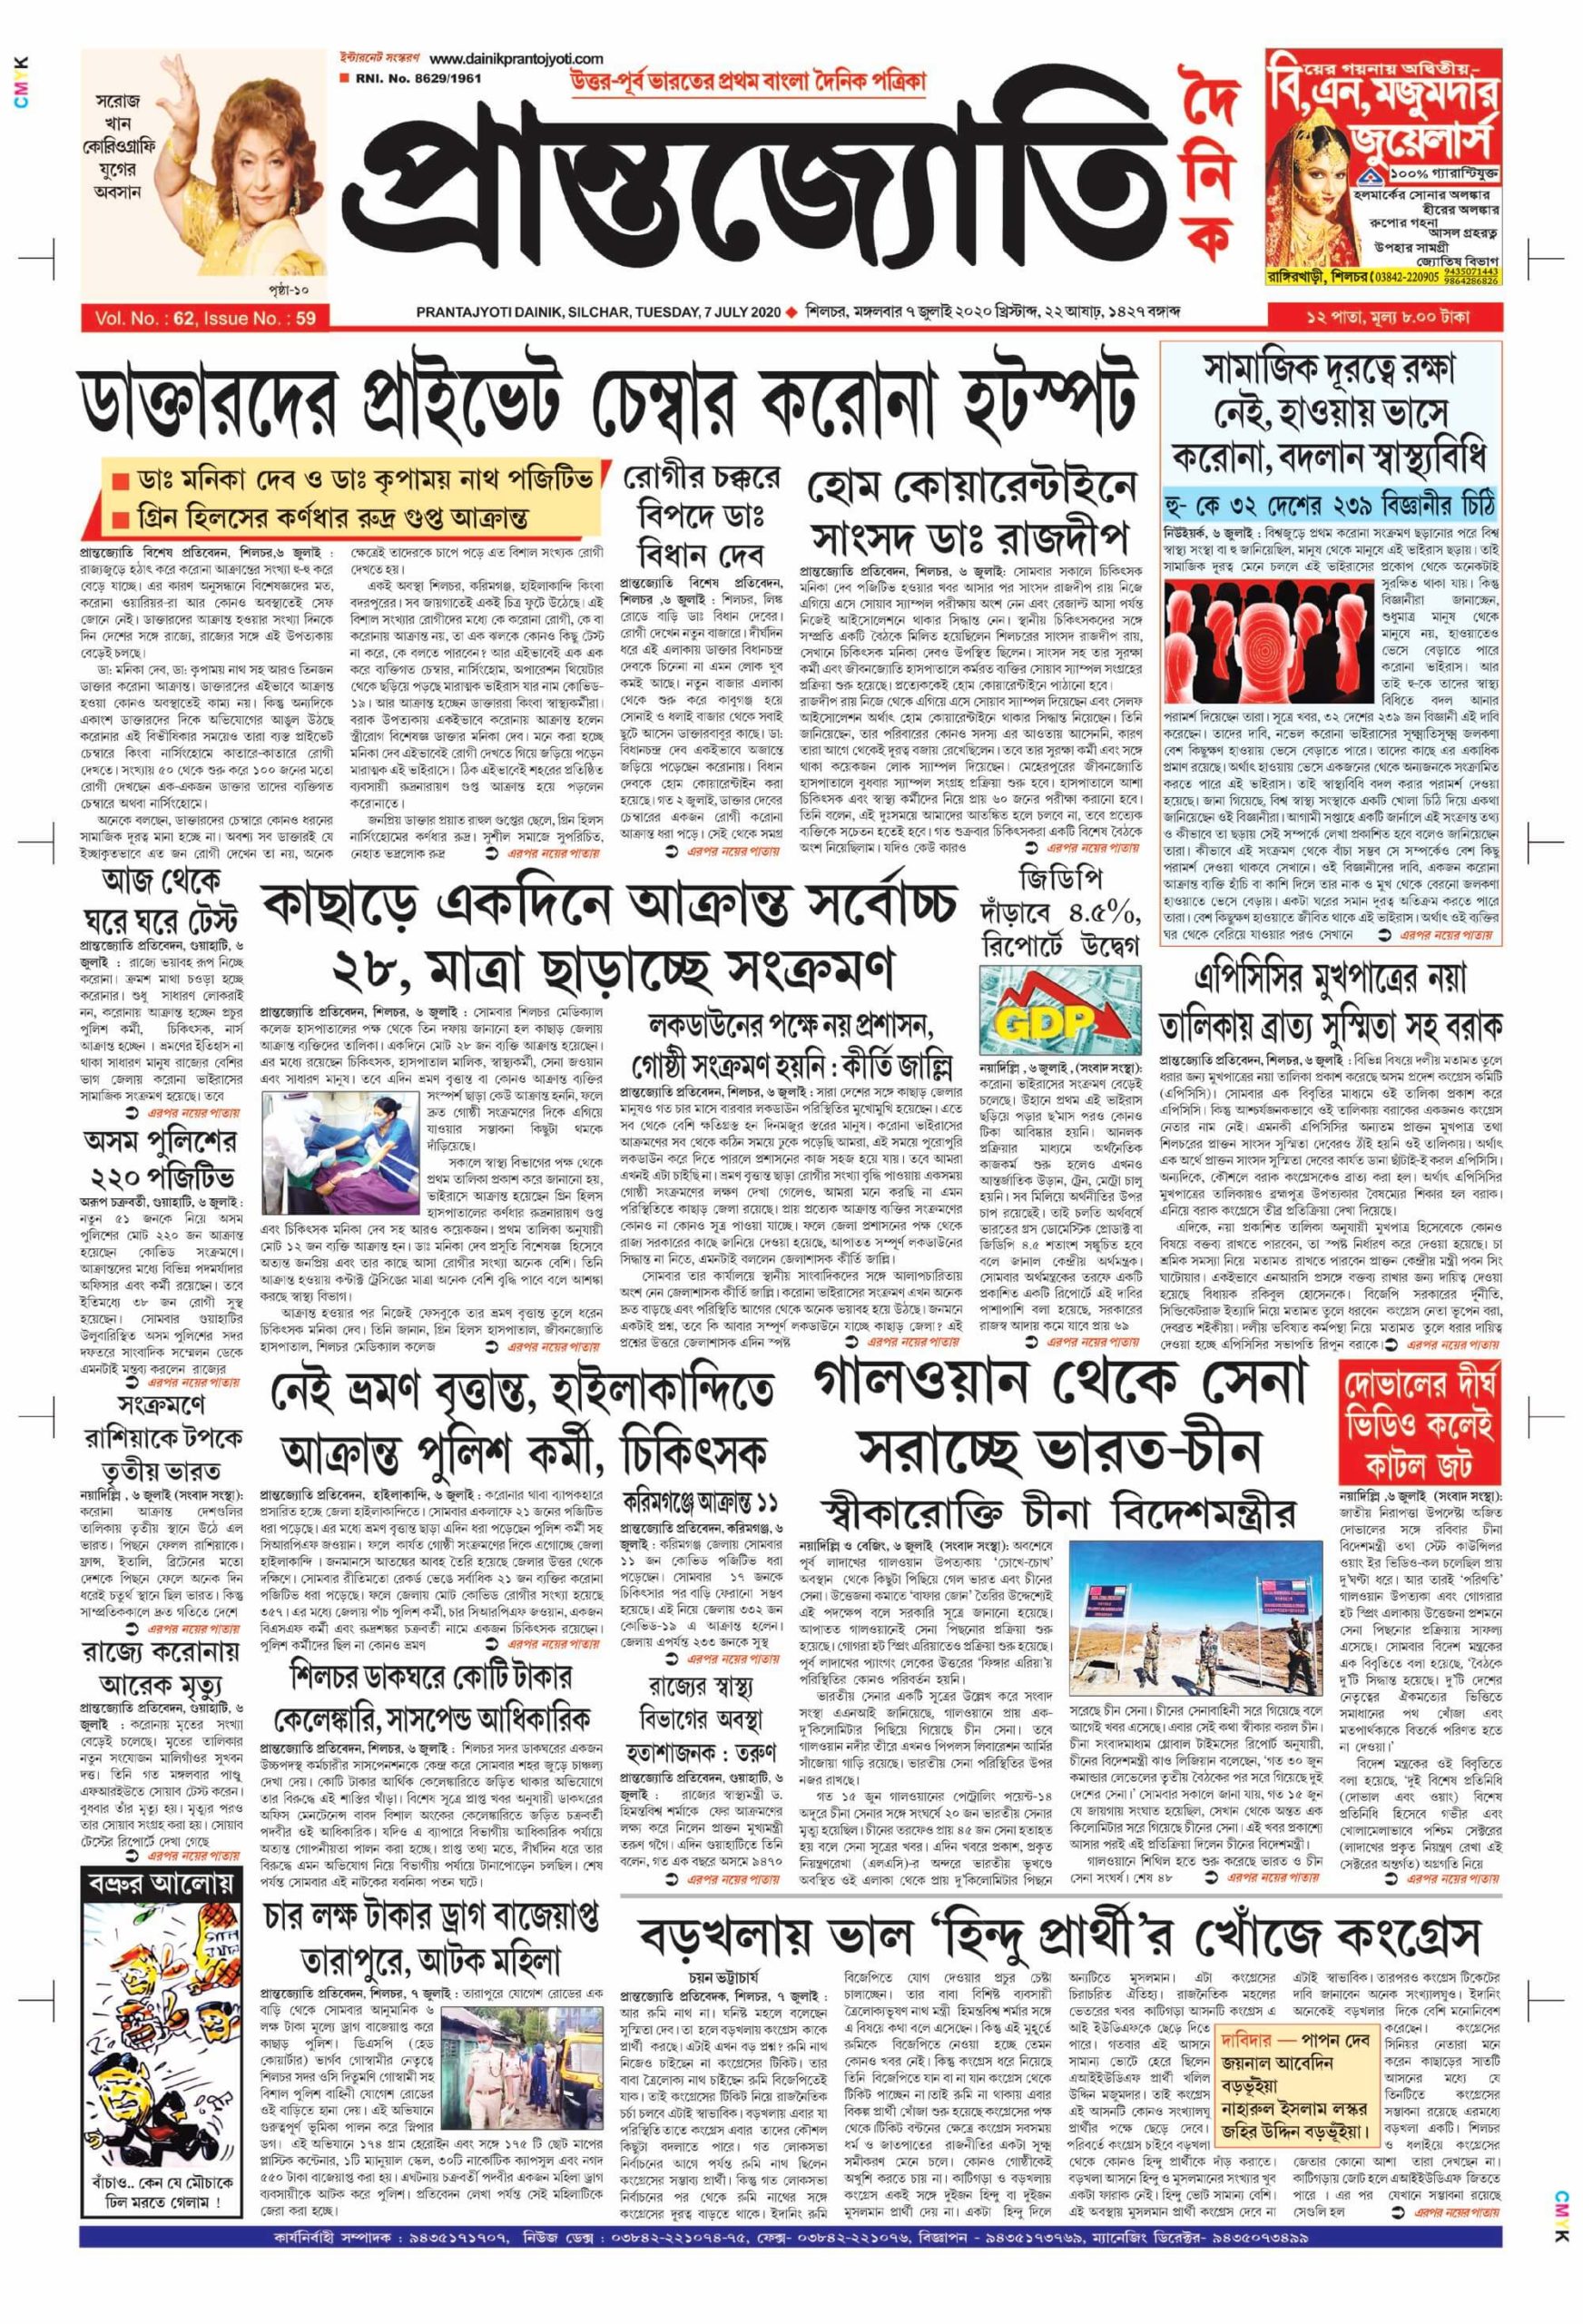 Assamese Newspapers 15 Dainik Prantojyoti scaled